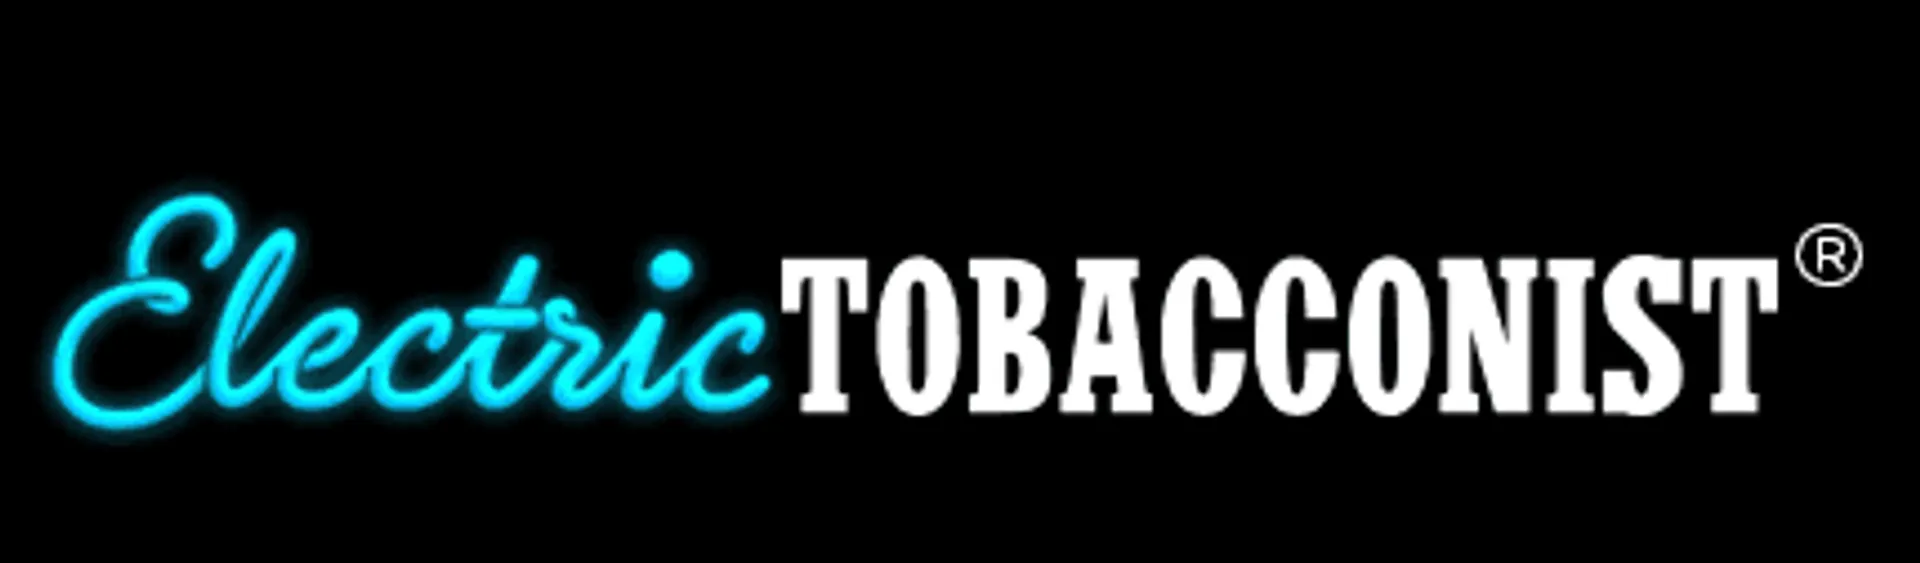 ELECTRIC TOBACCONIST logo